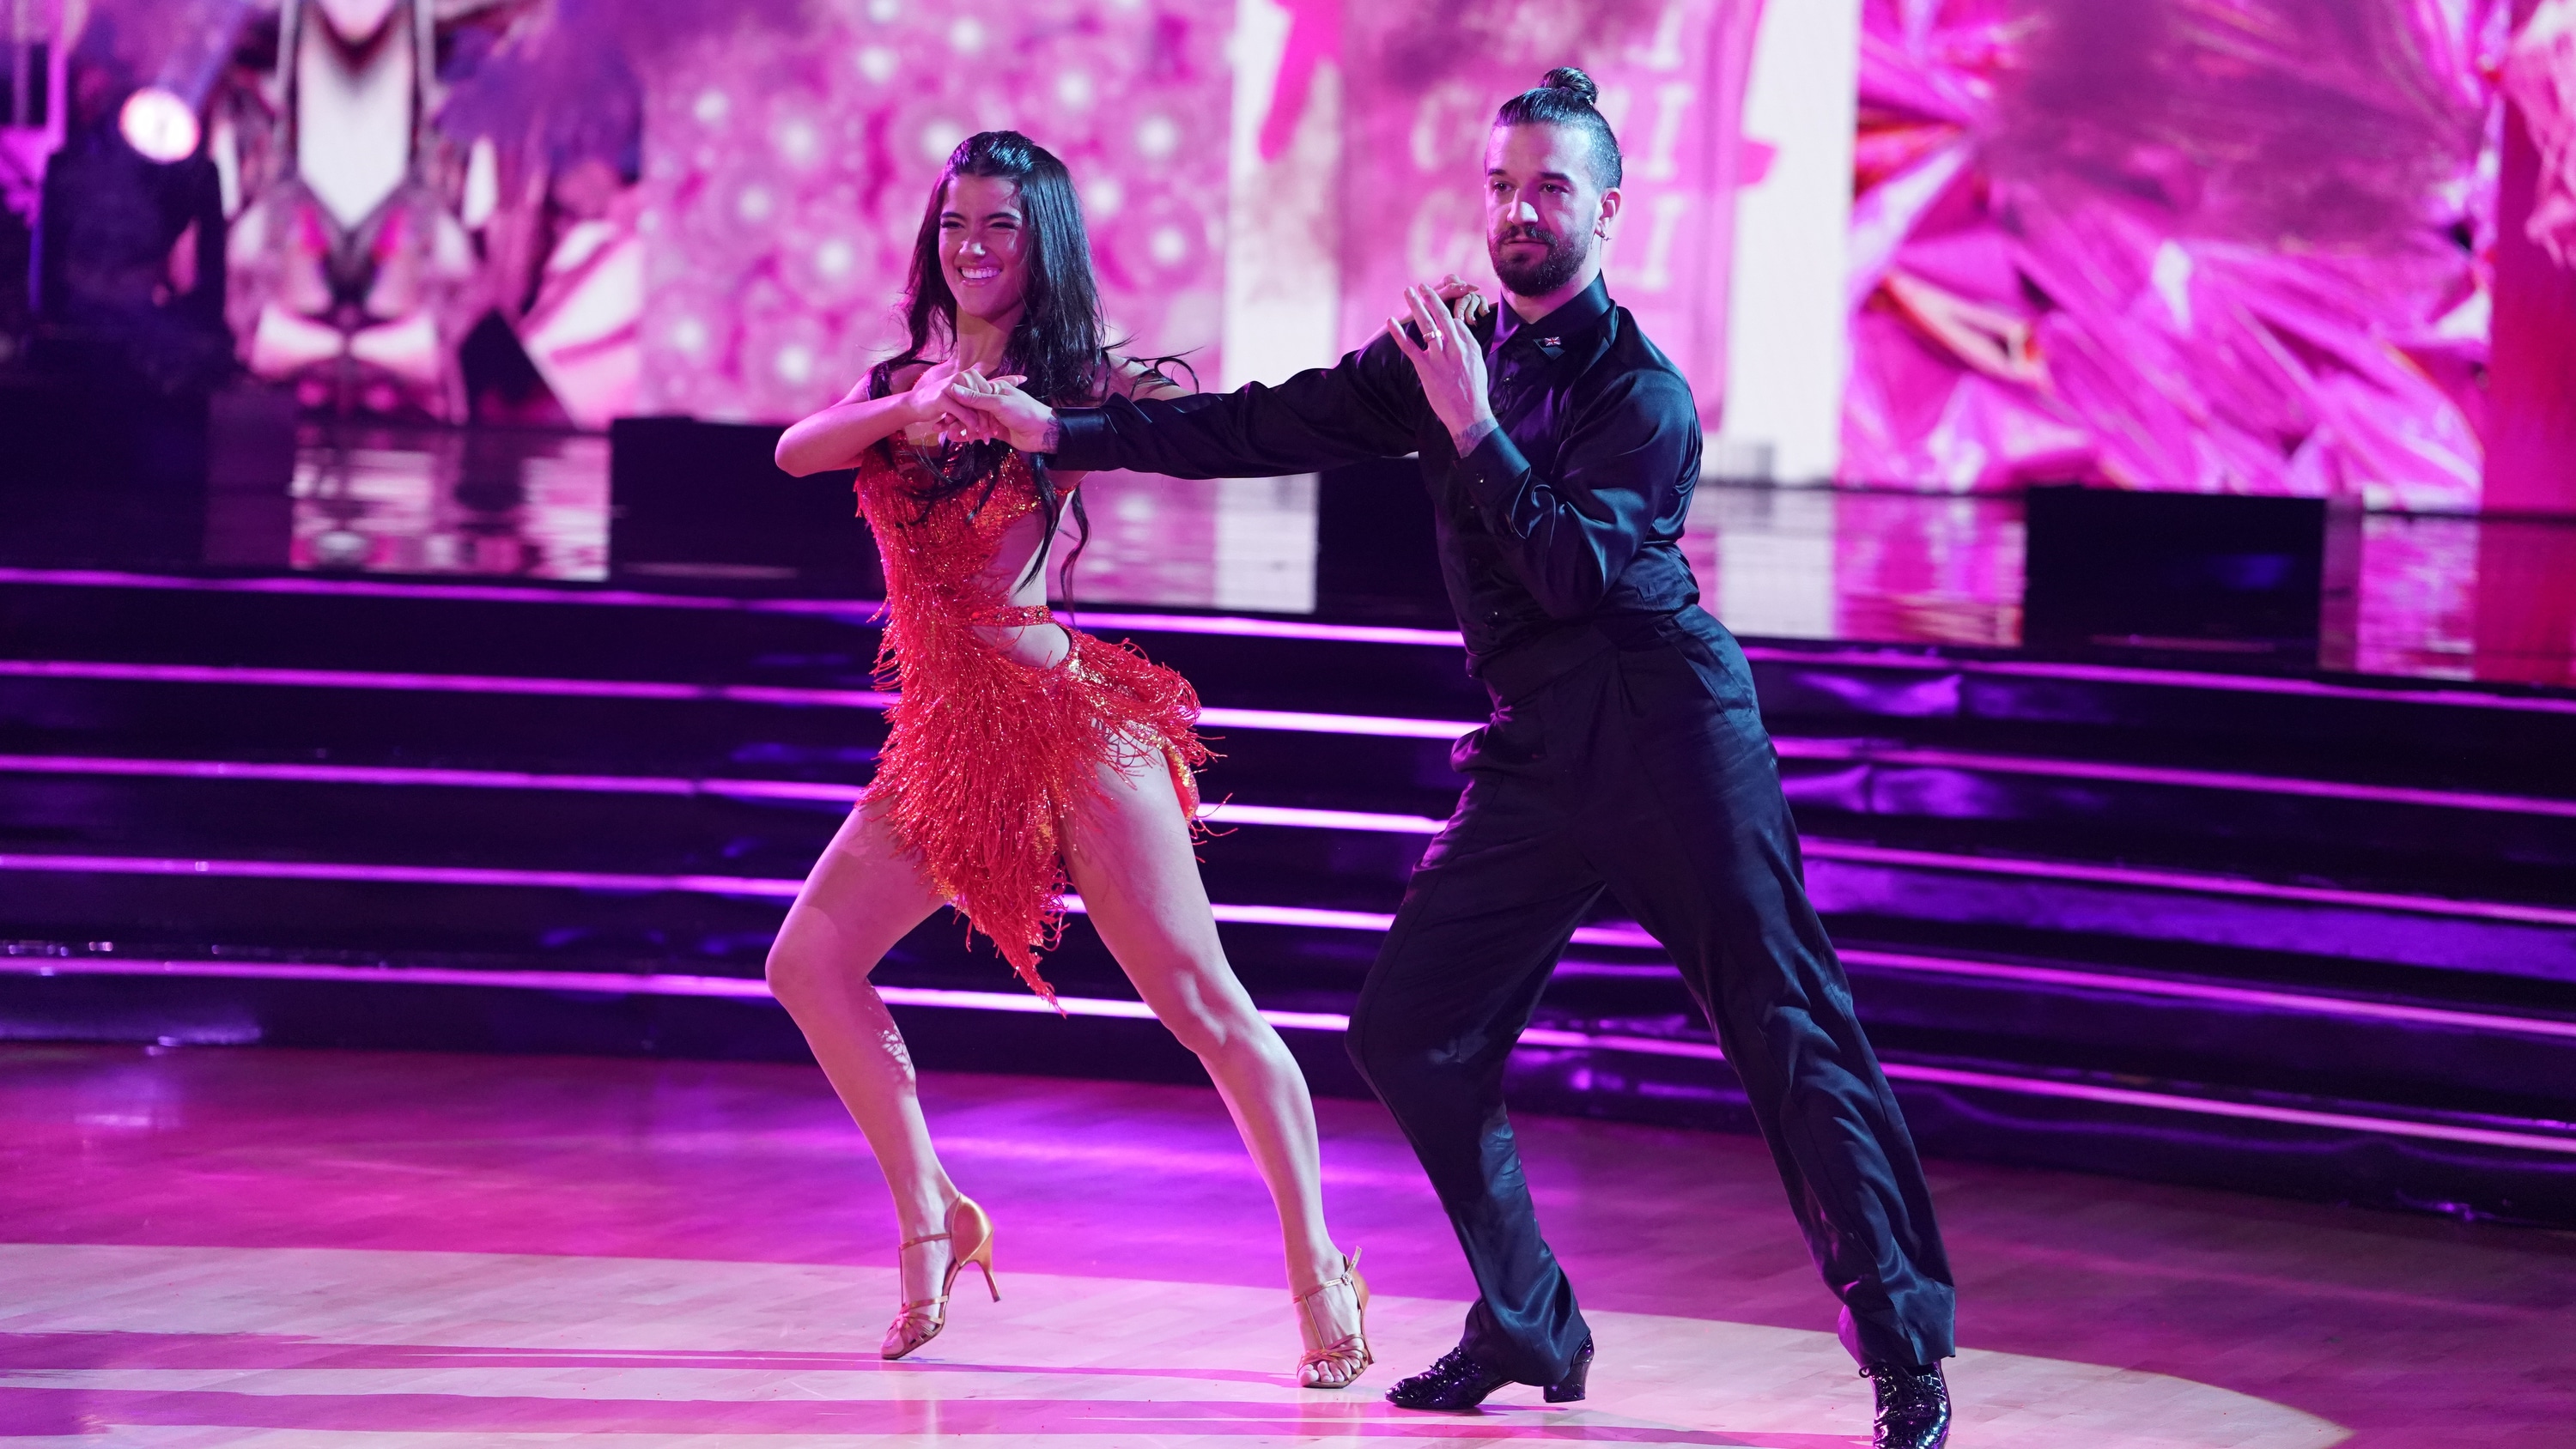 TikTok star Charli D’Amelio dancing the Cha-Cha to Megan Thee Stallion’s Savage on Dancing with the Stars